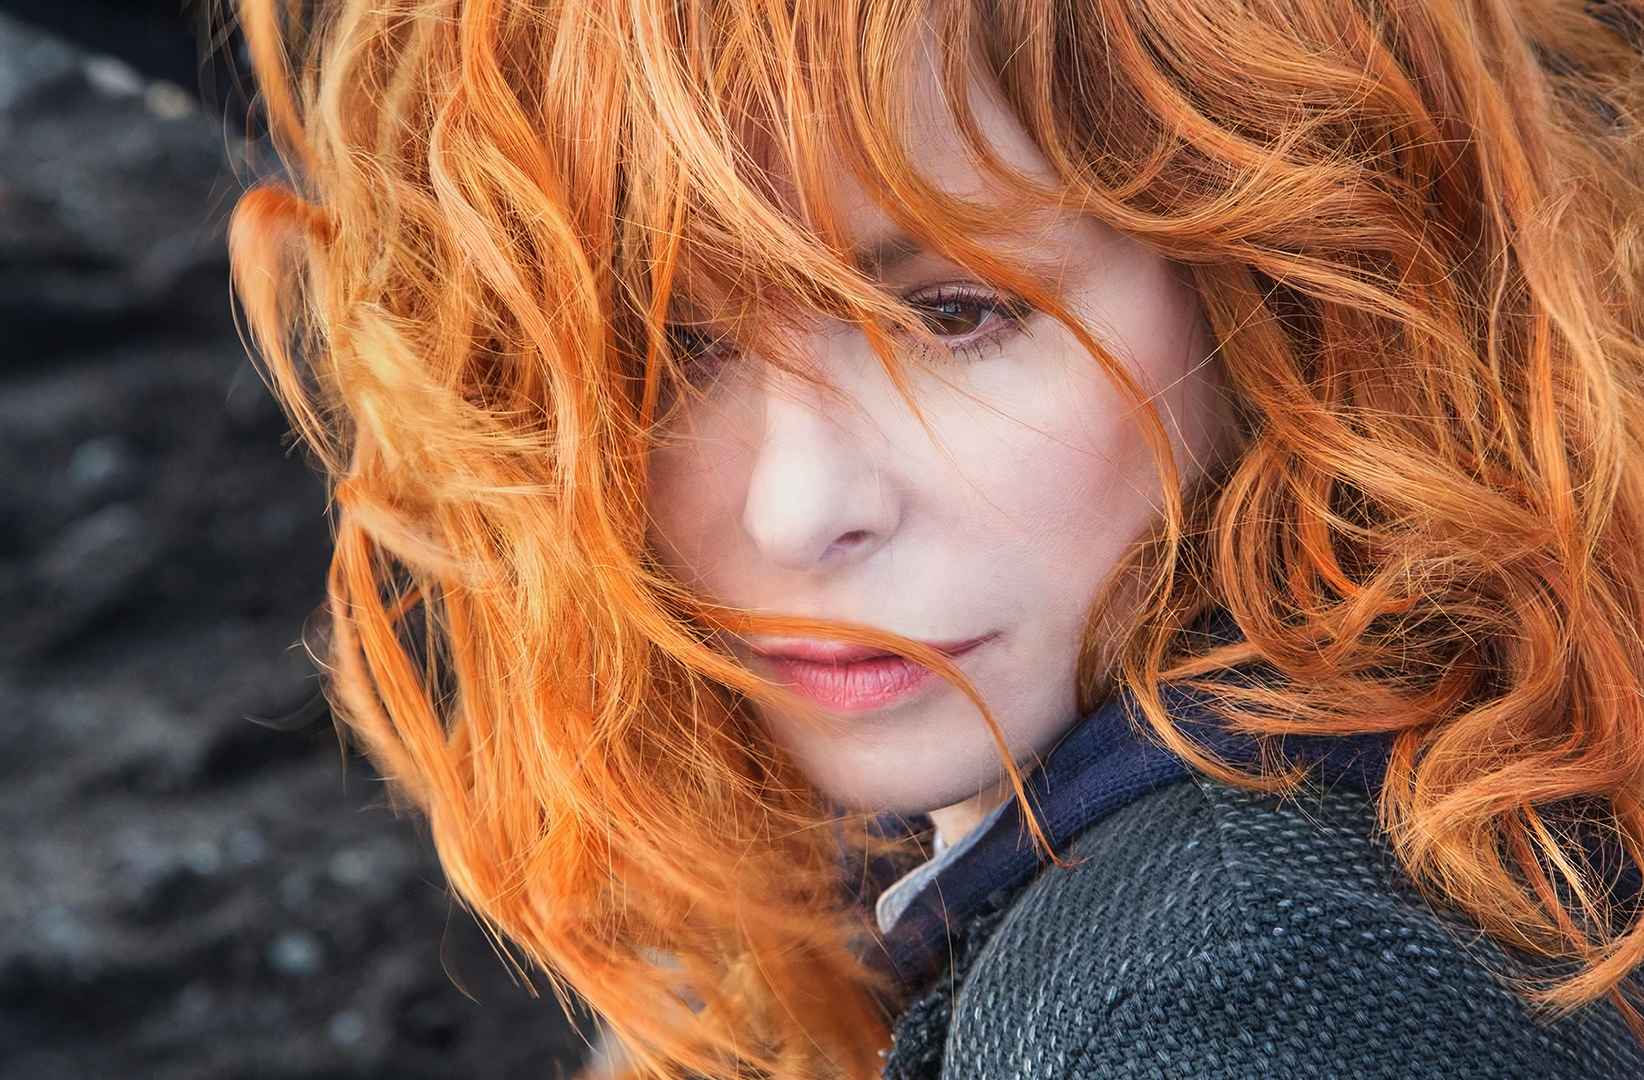 People 1644x1080 Mylène Farmer French singer redhead hair in face looking away women